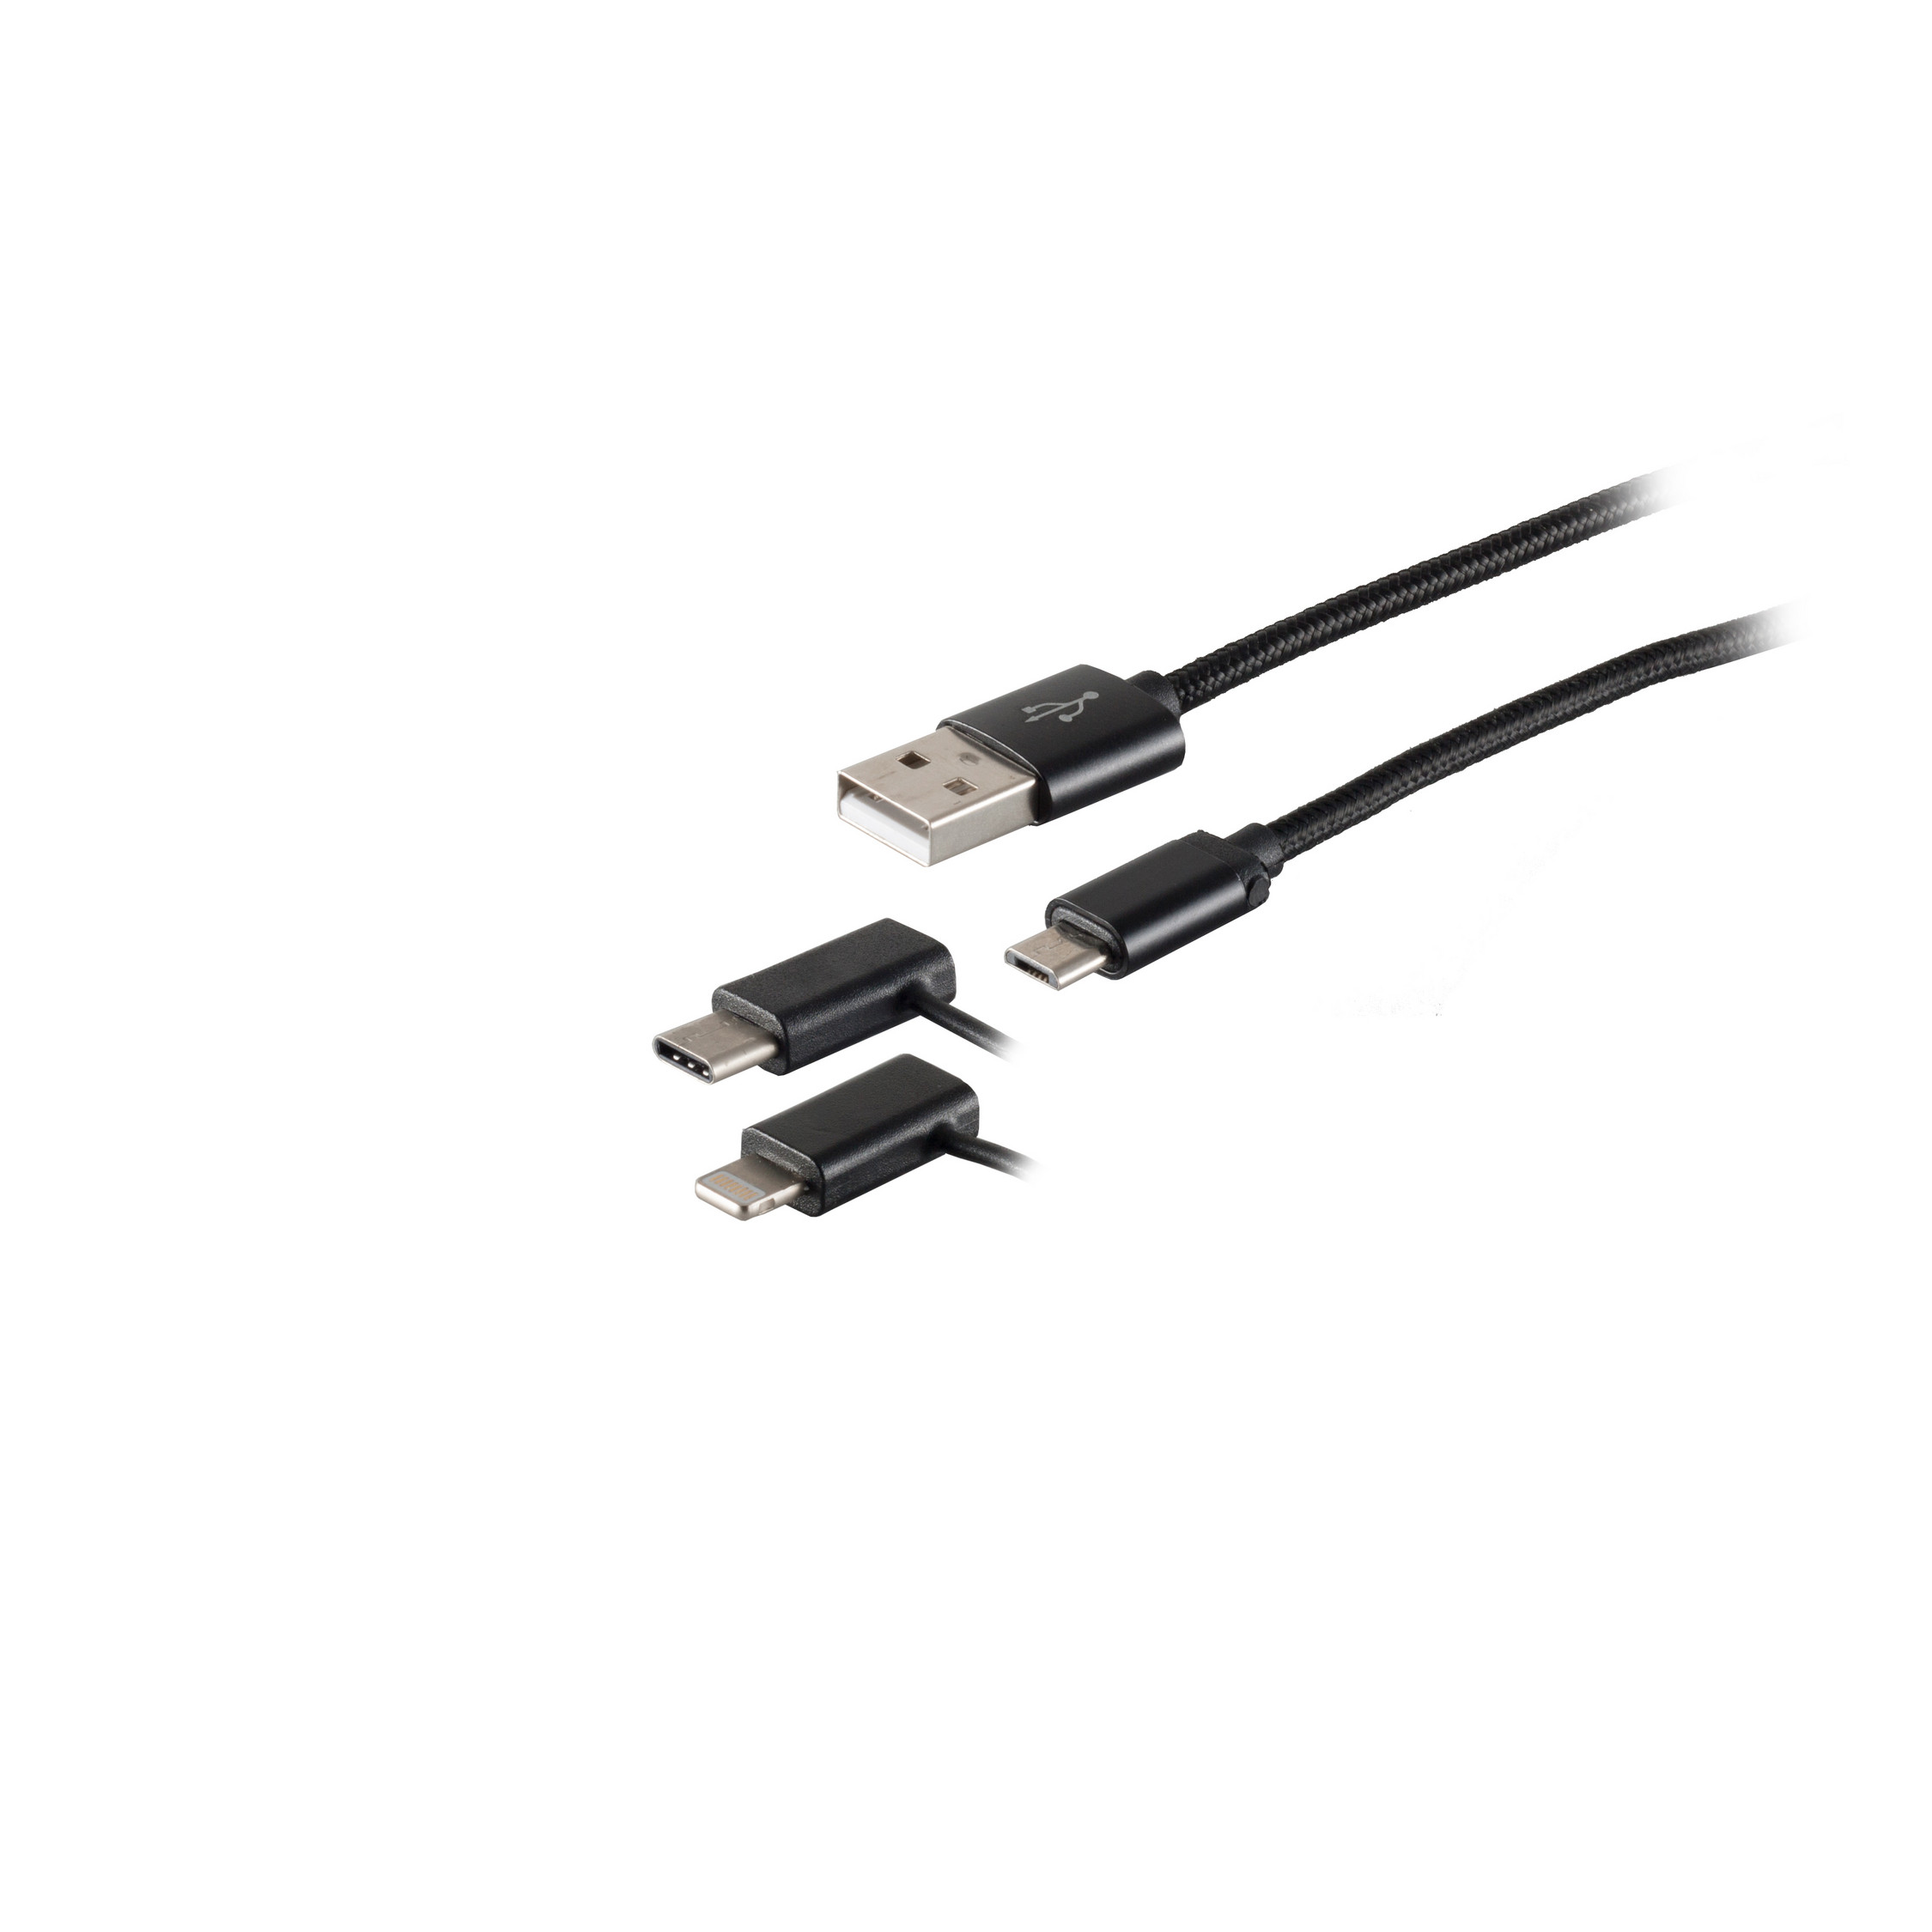 C/ 8-pin Kabel MicroB/ Ladekabel Typ 3in1 USB Stecker S/CONN 1m MAXIMUM CONNECTIVITY